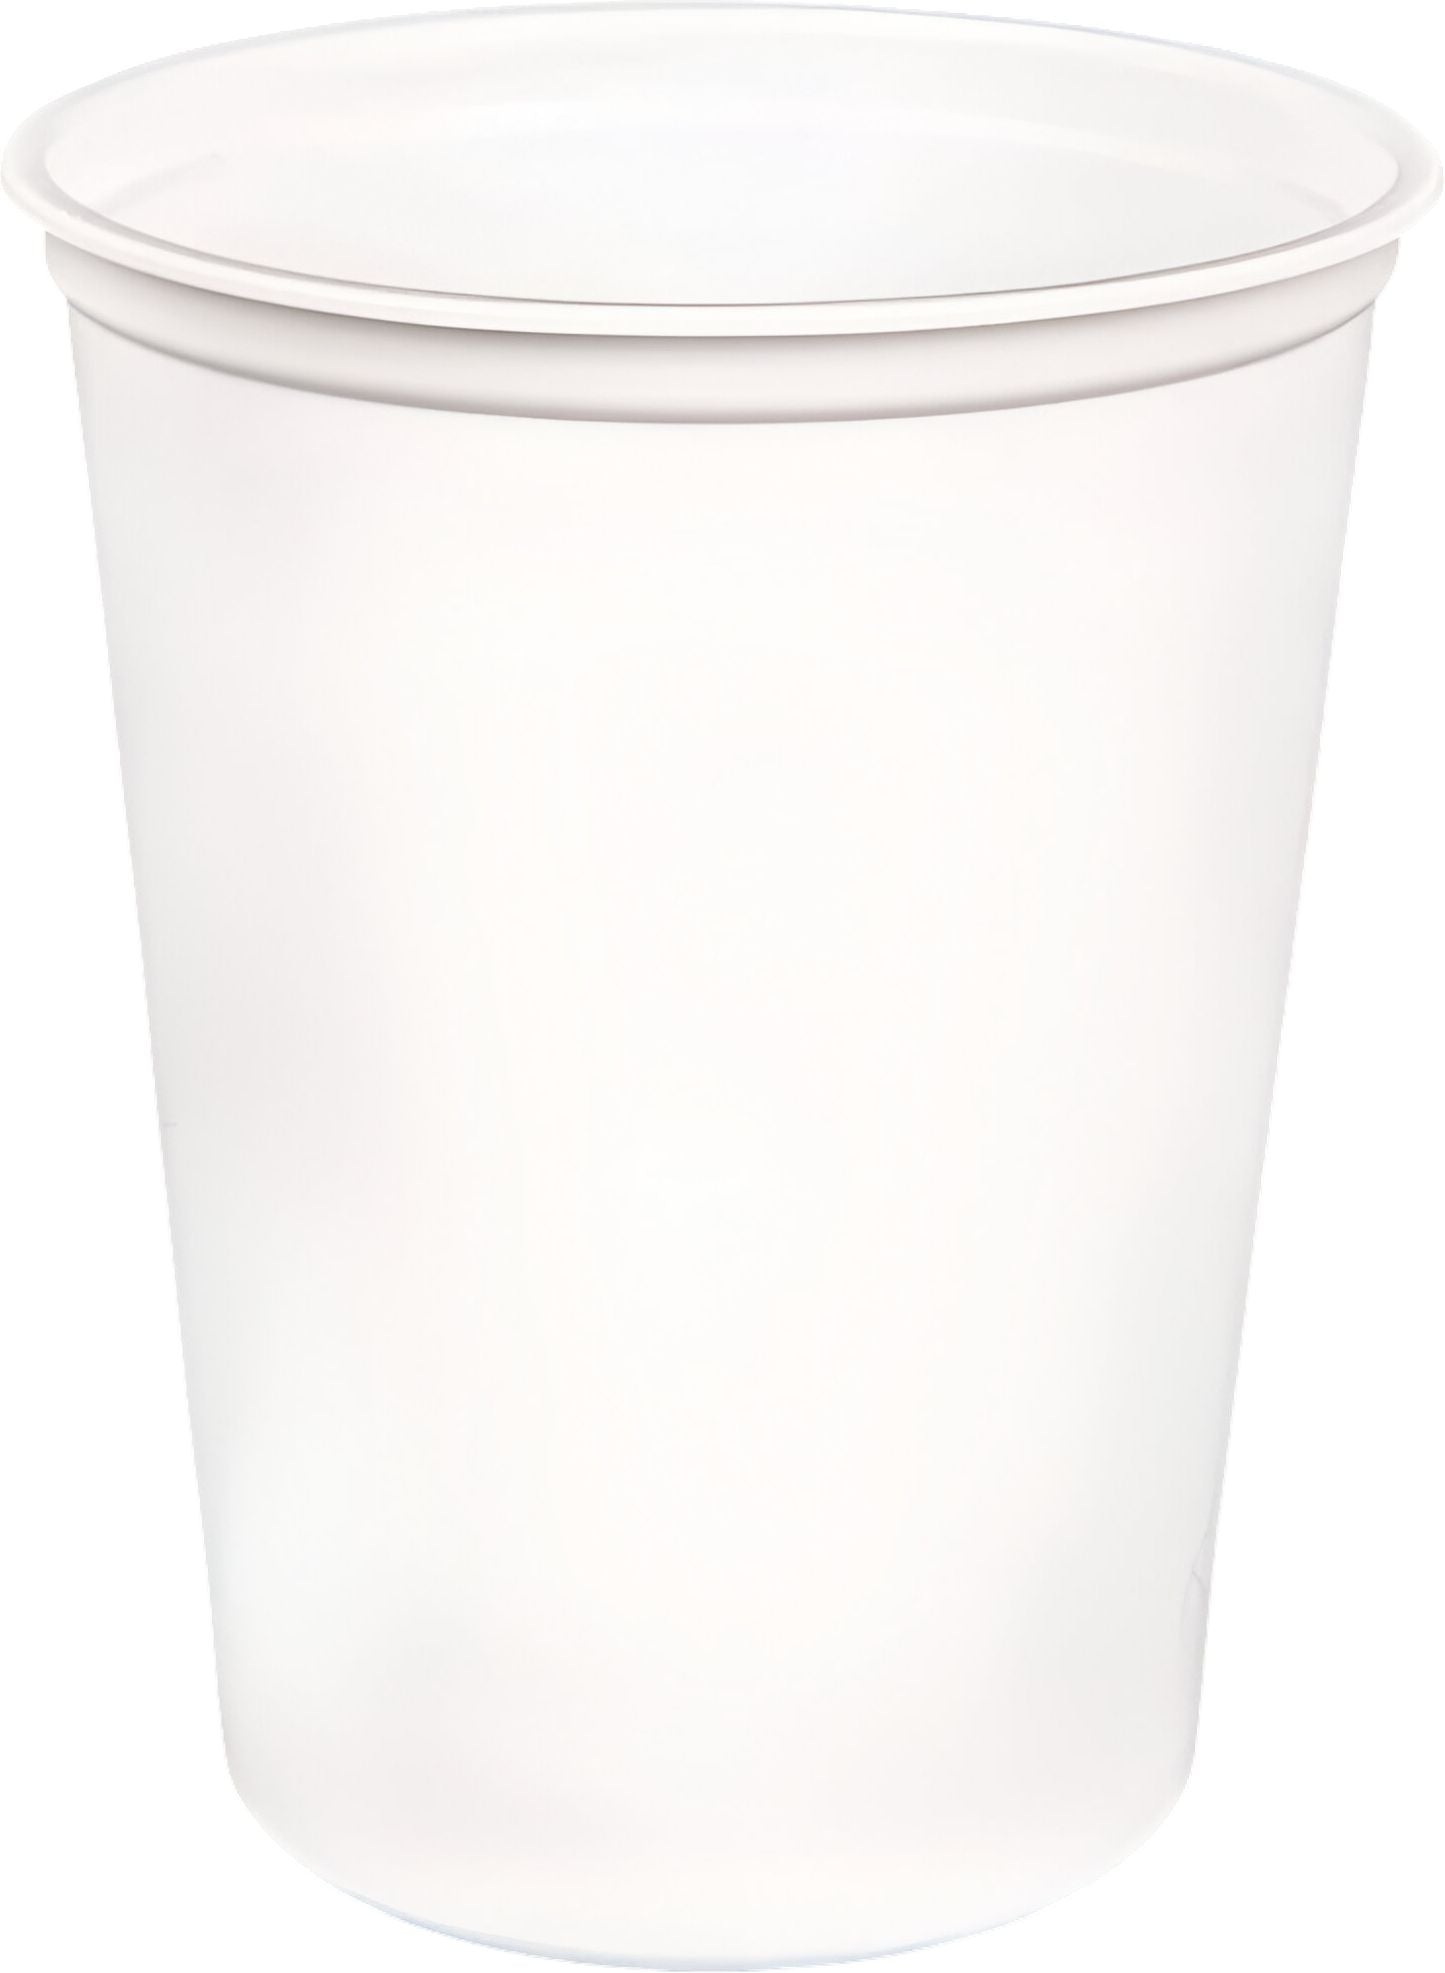 Plastipak - 35 Oz White Polypropylene Food Containers, 300/Cs - 181A